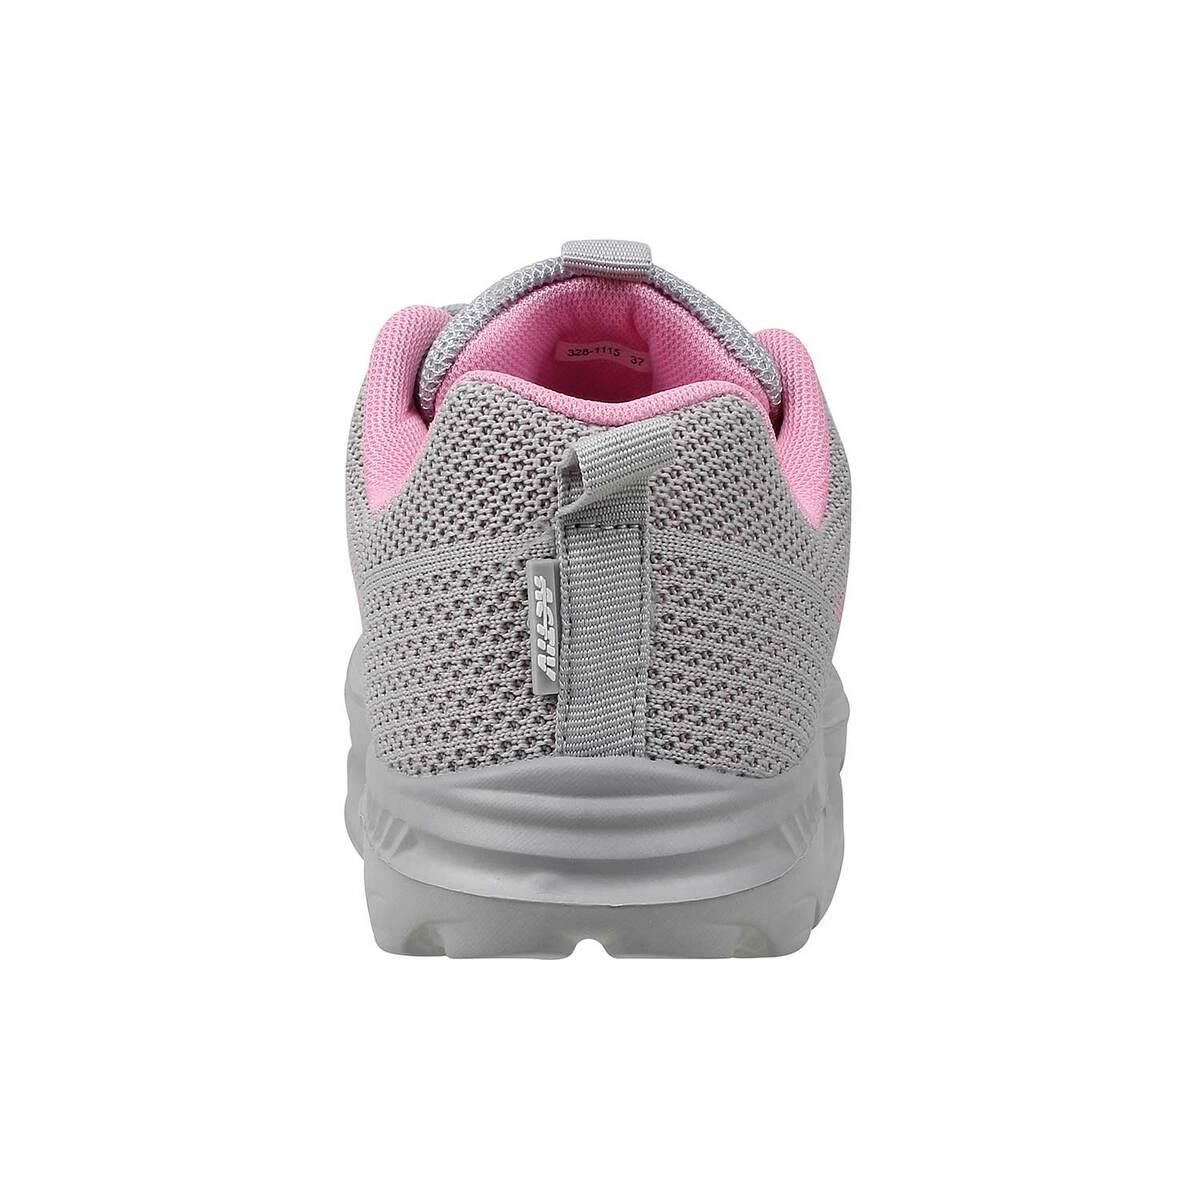 Buy Activ Grey Sports Sneakers Online | SKU:328-1115-14-36 - Metro Shoes